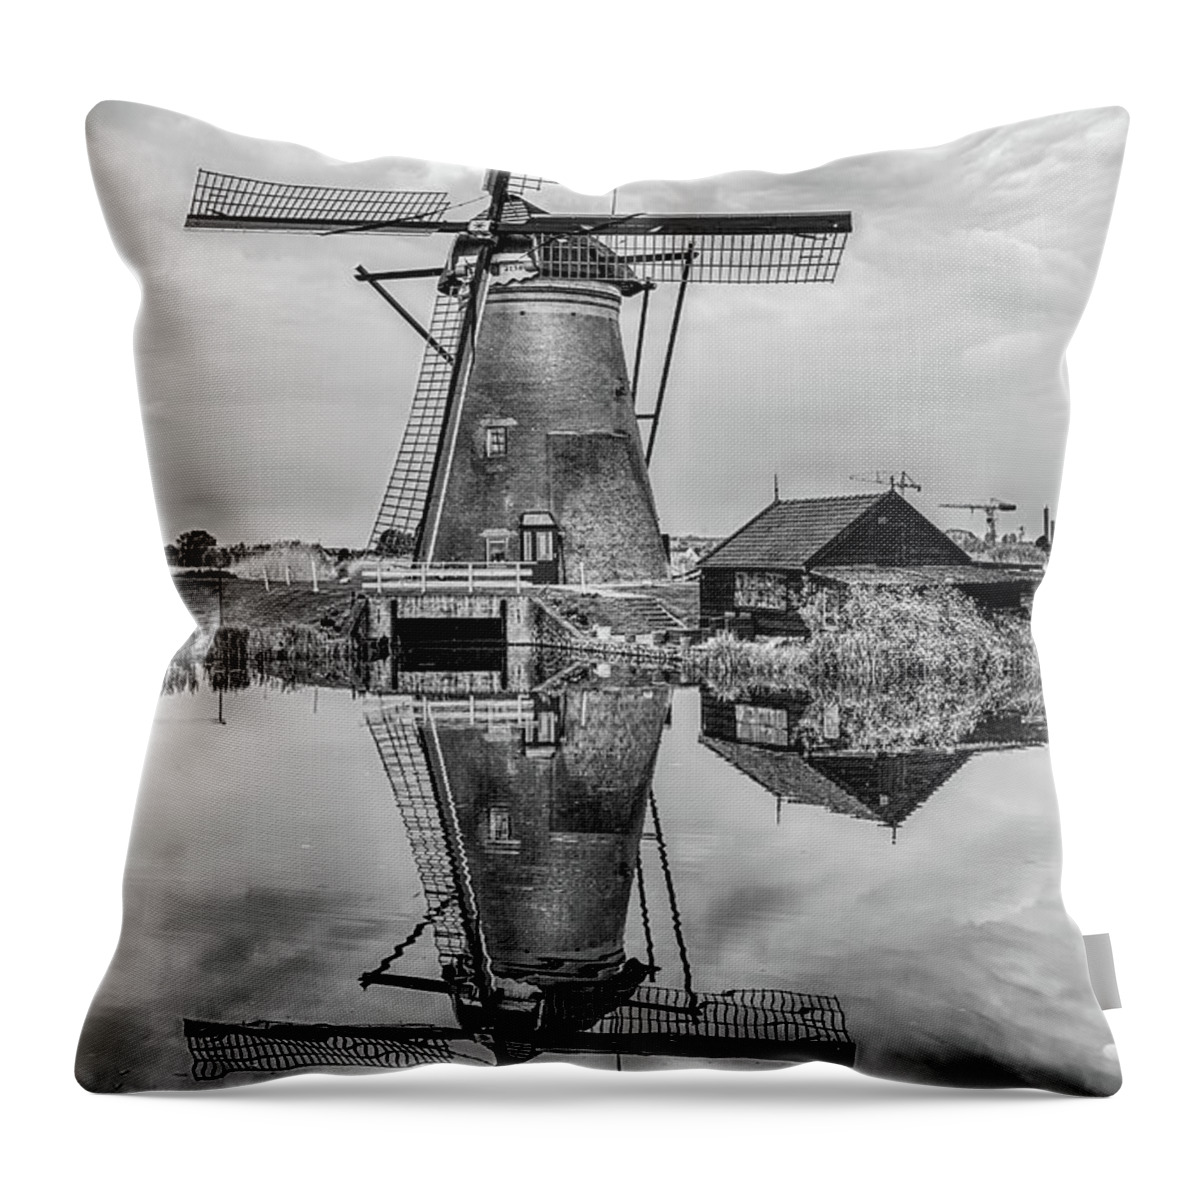 Europe Throw Pillow featuring the photograph Kinderdijk Windmill by Jim Miller